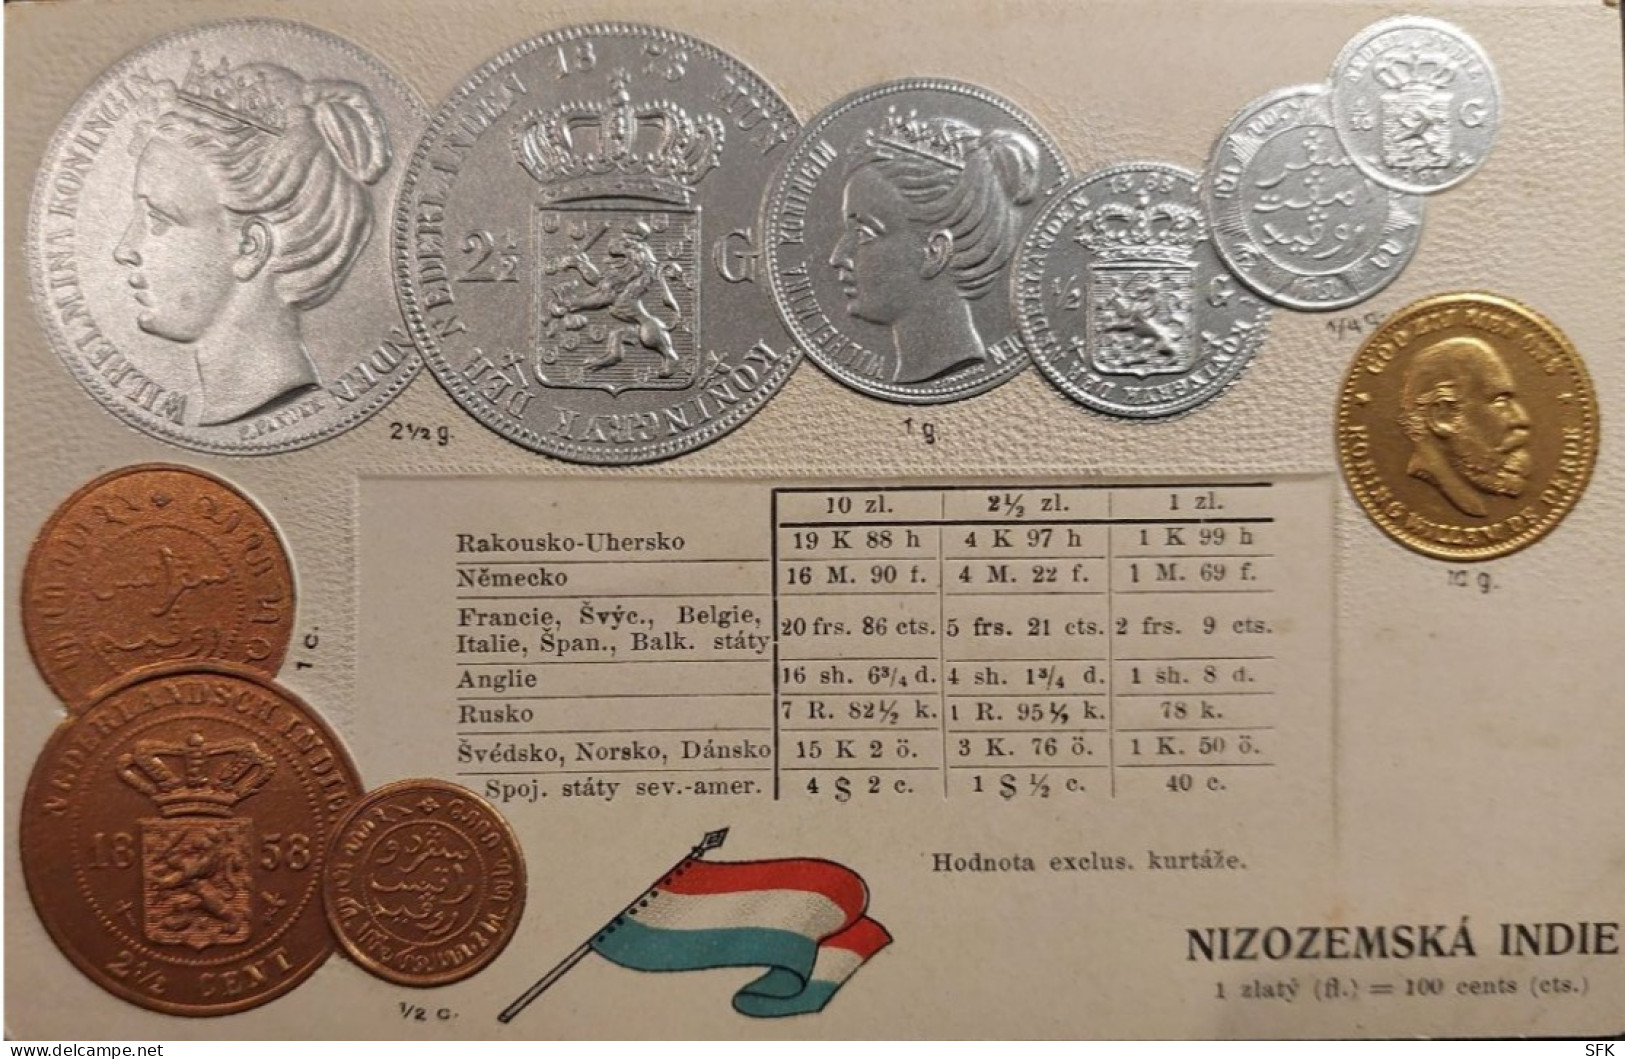 Netherland INDIA, Coins I/II- VF,  776 - Münzen (Abb.)